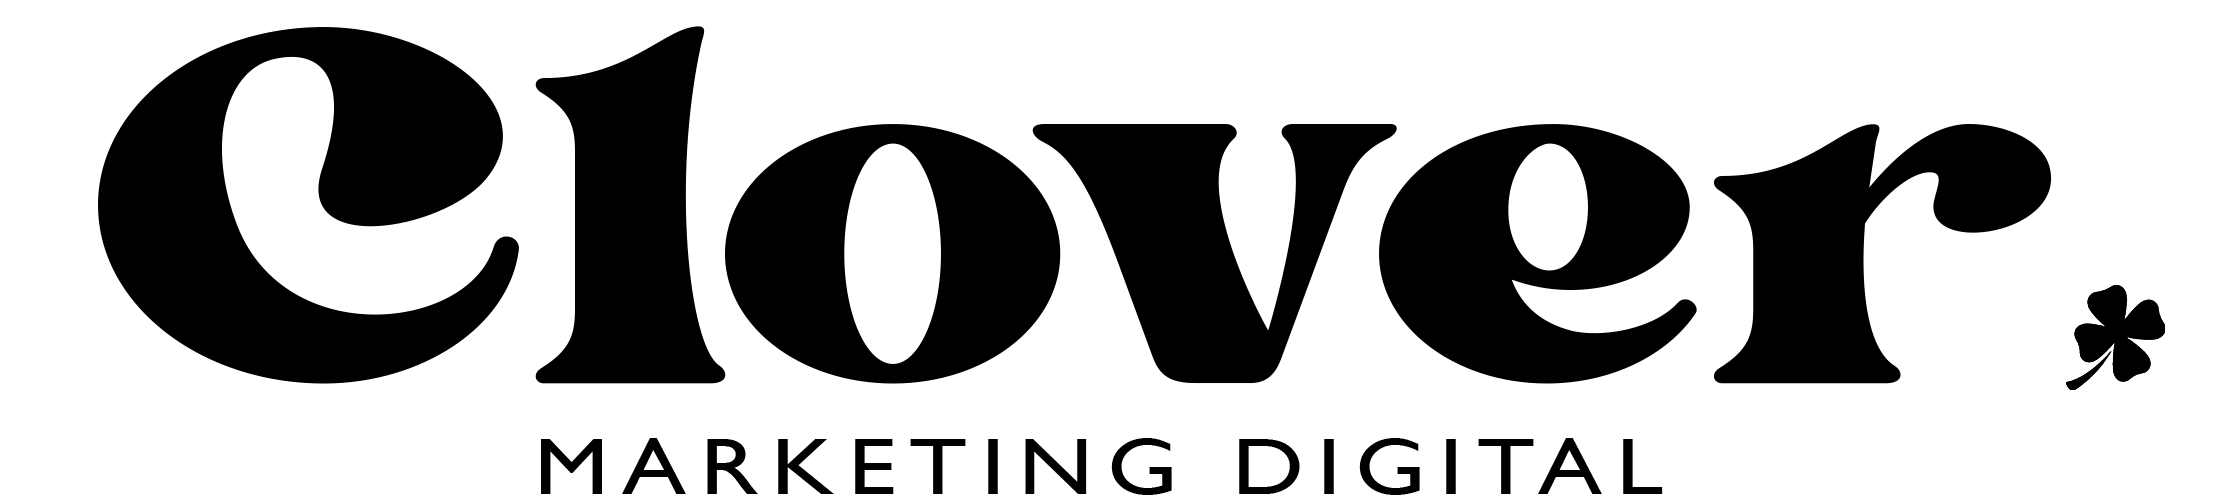 Logo Clover, agencia marketing